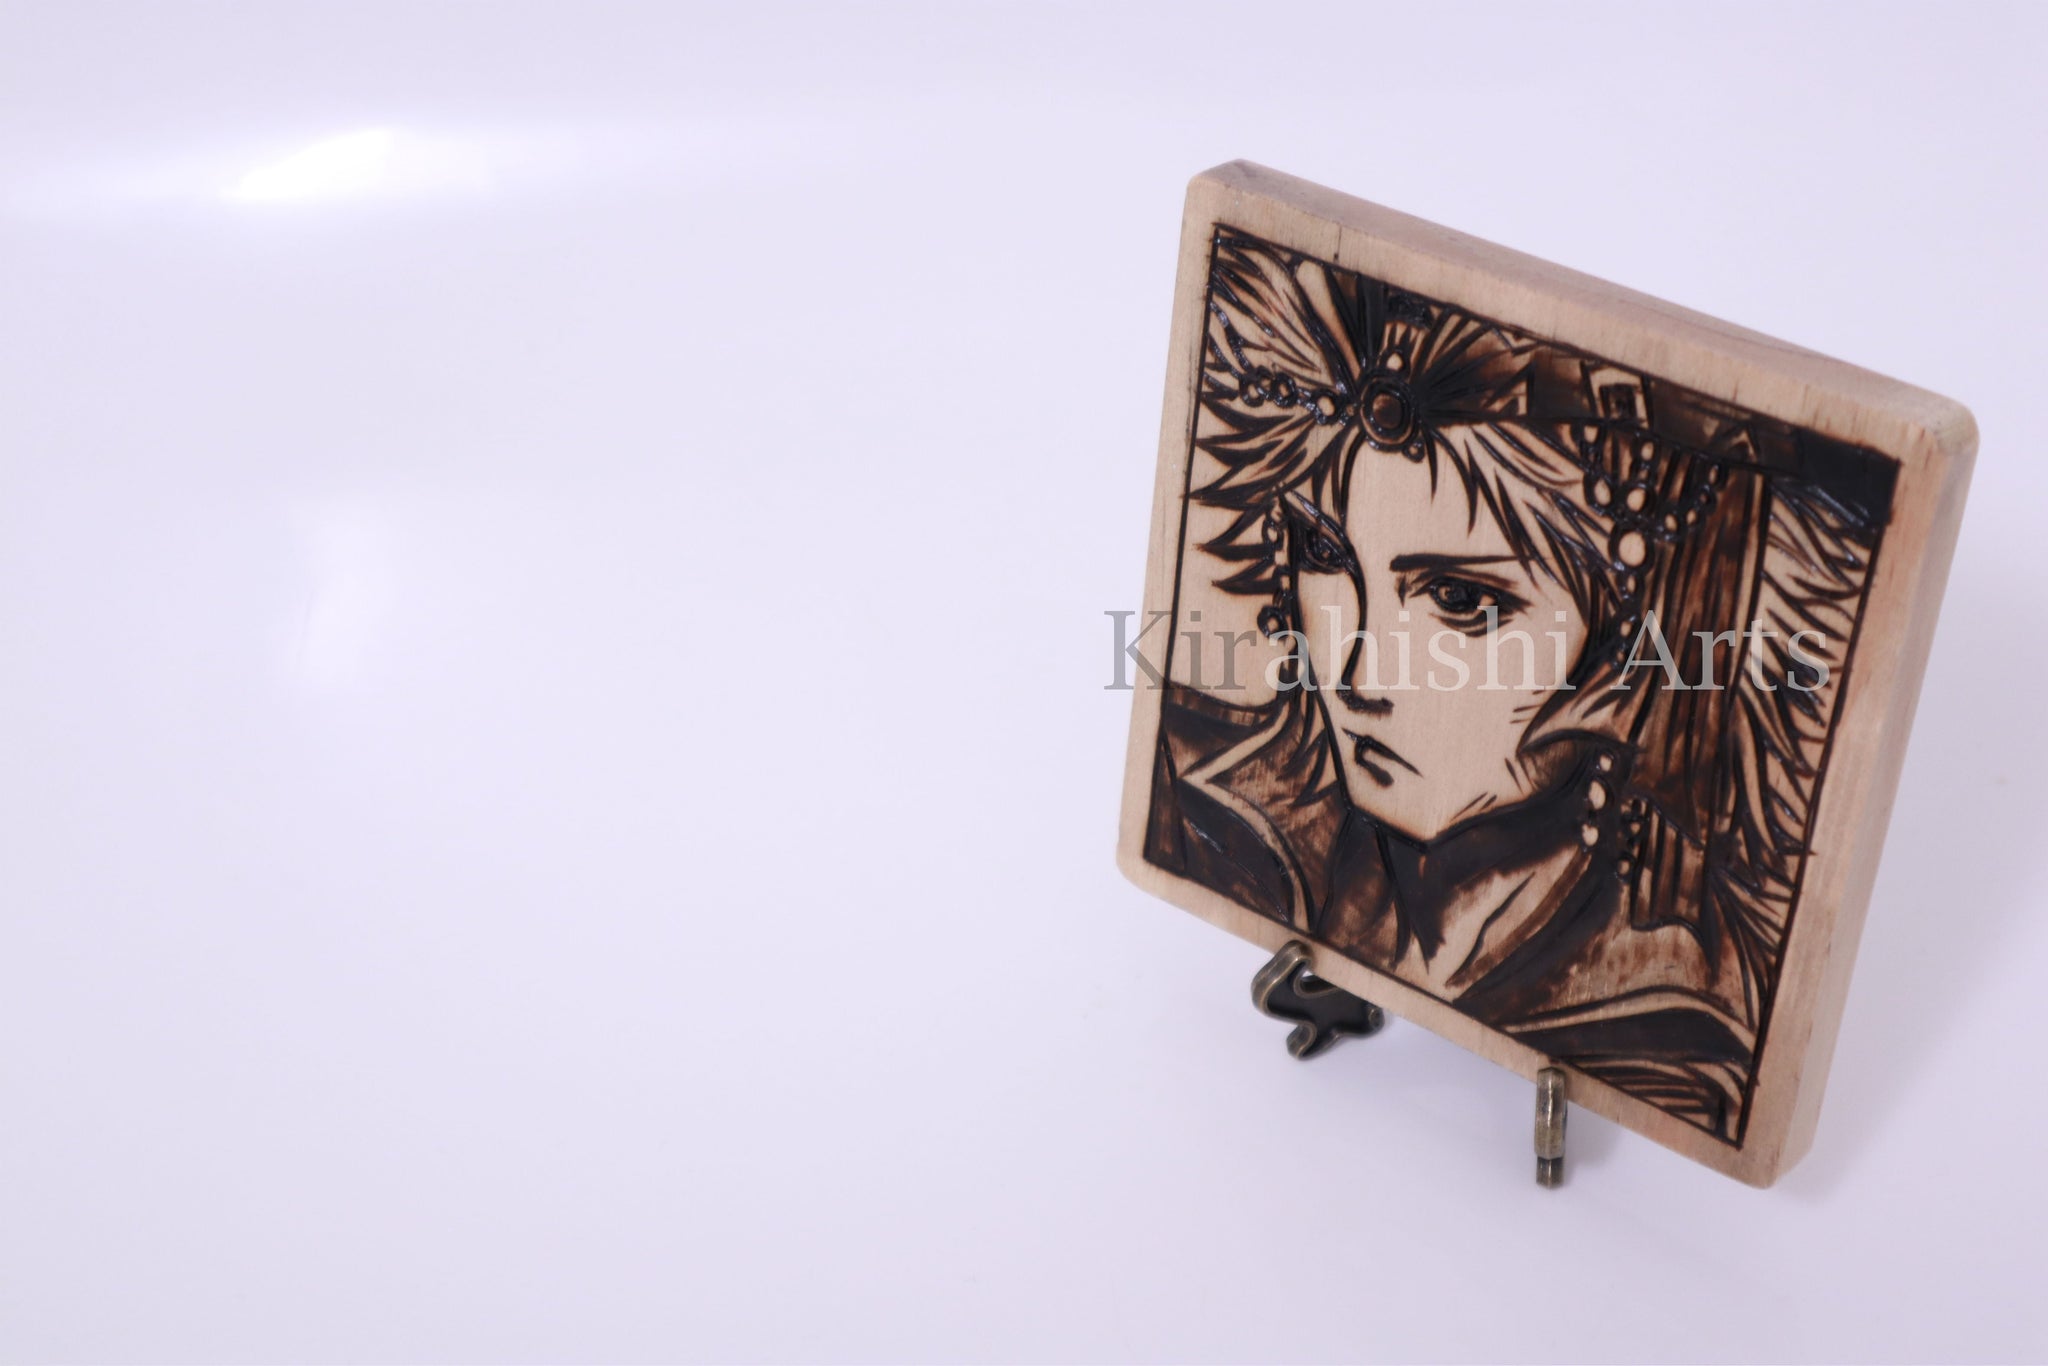 Firion 10cmx10cm Wooden Plaque (Final Fantasy II)